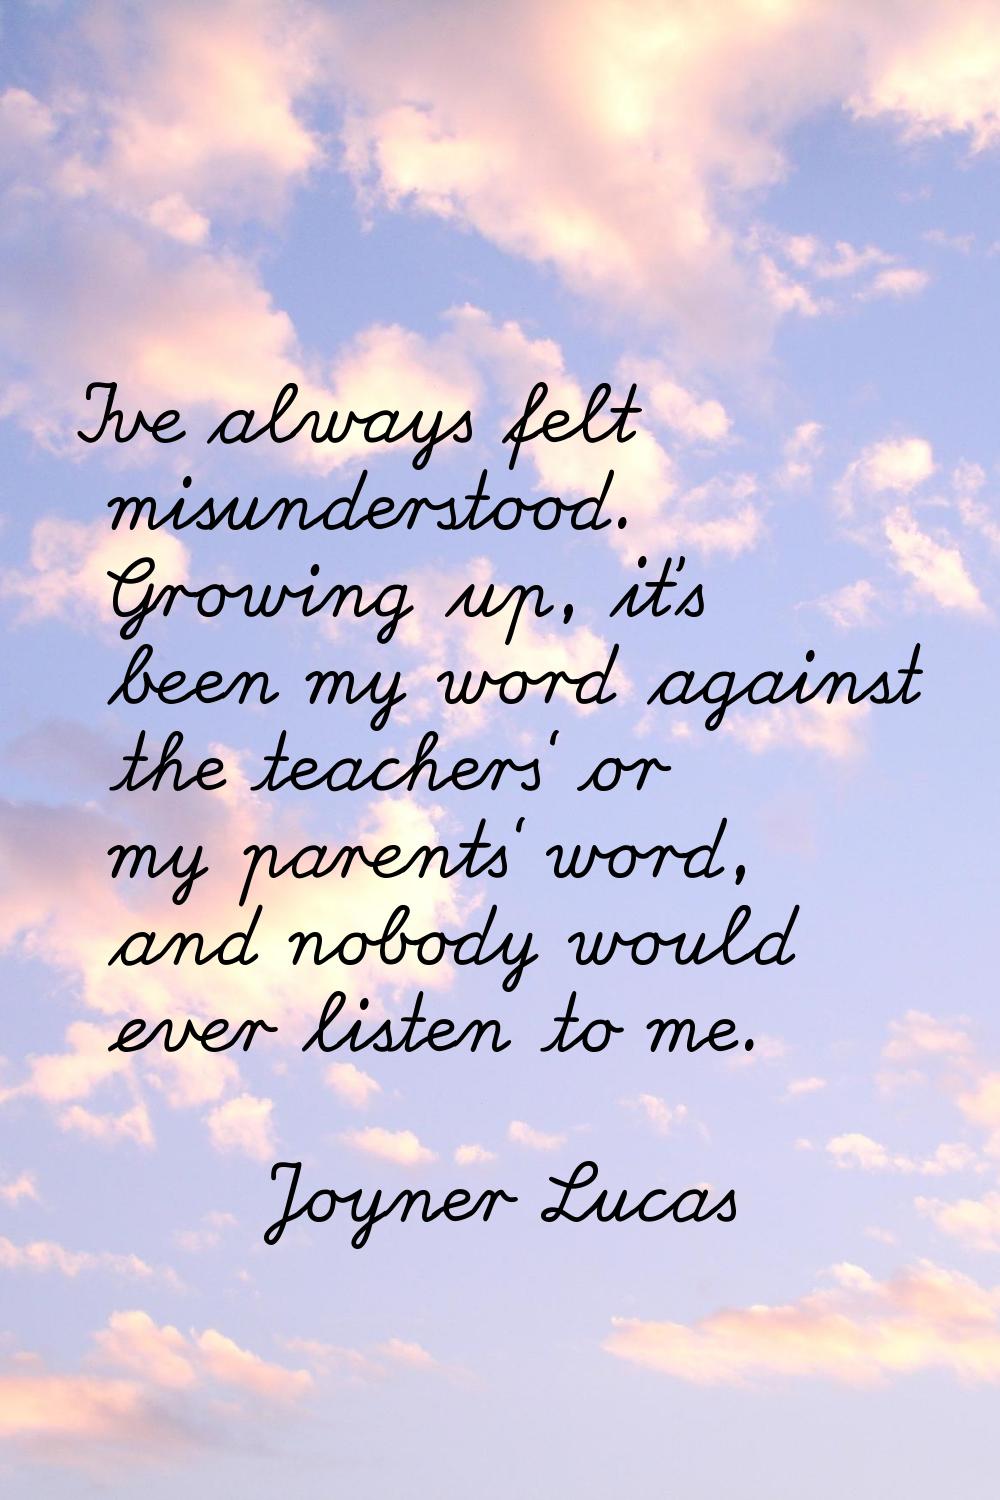 I've always felt misunderstood. Growing up, it's been my word against the teachers' or my parents' 